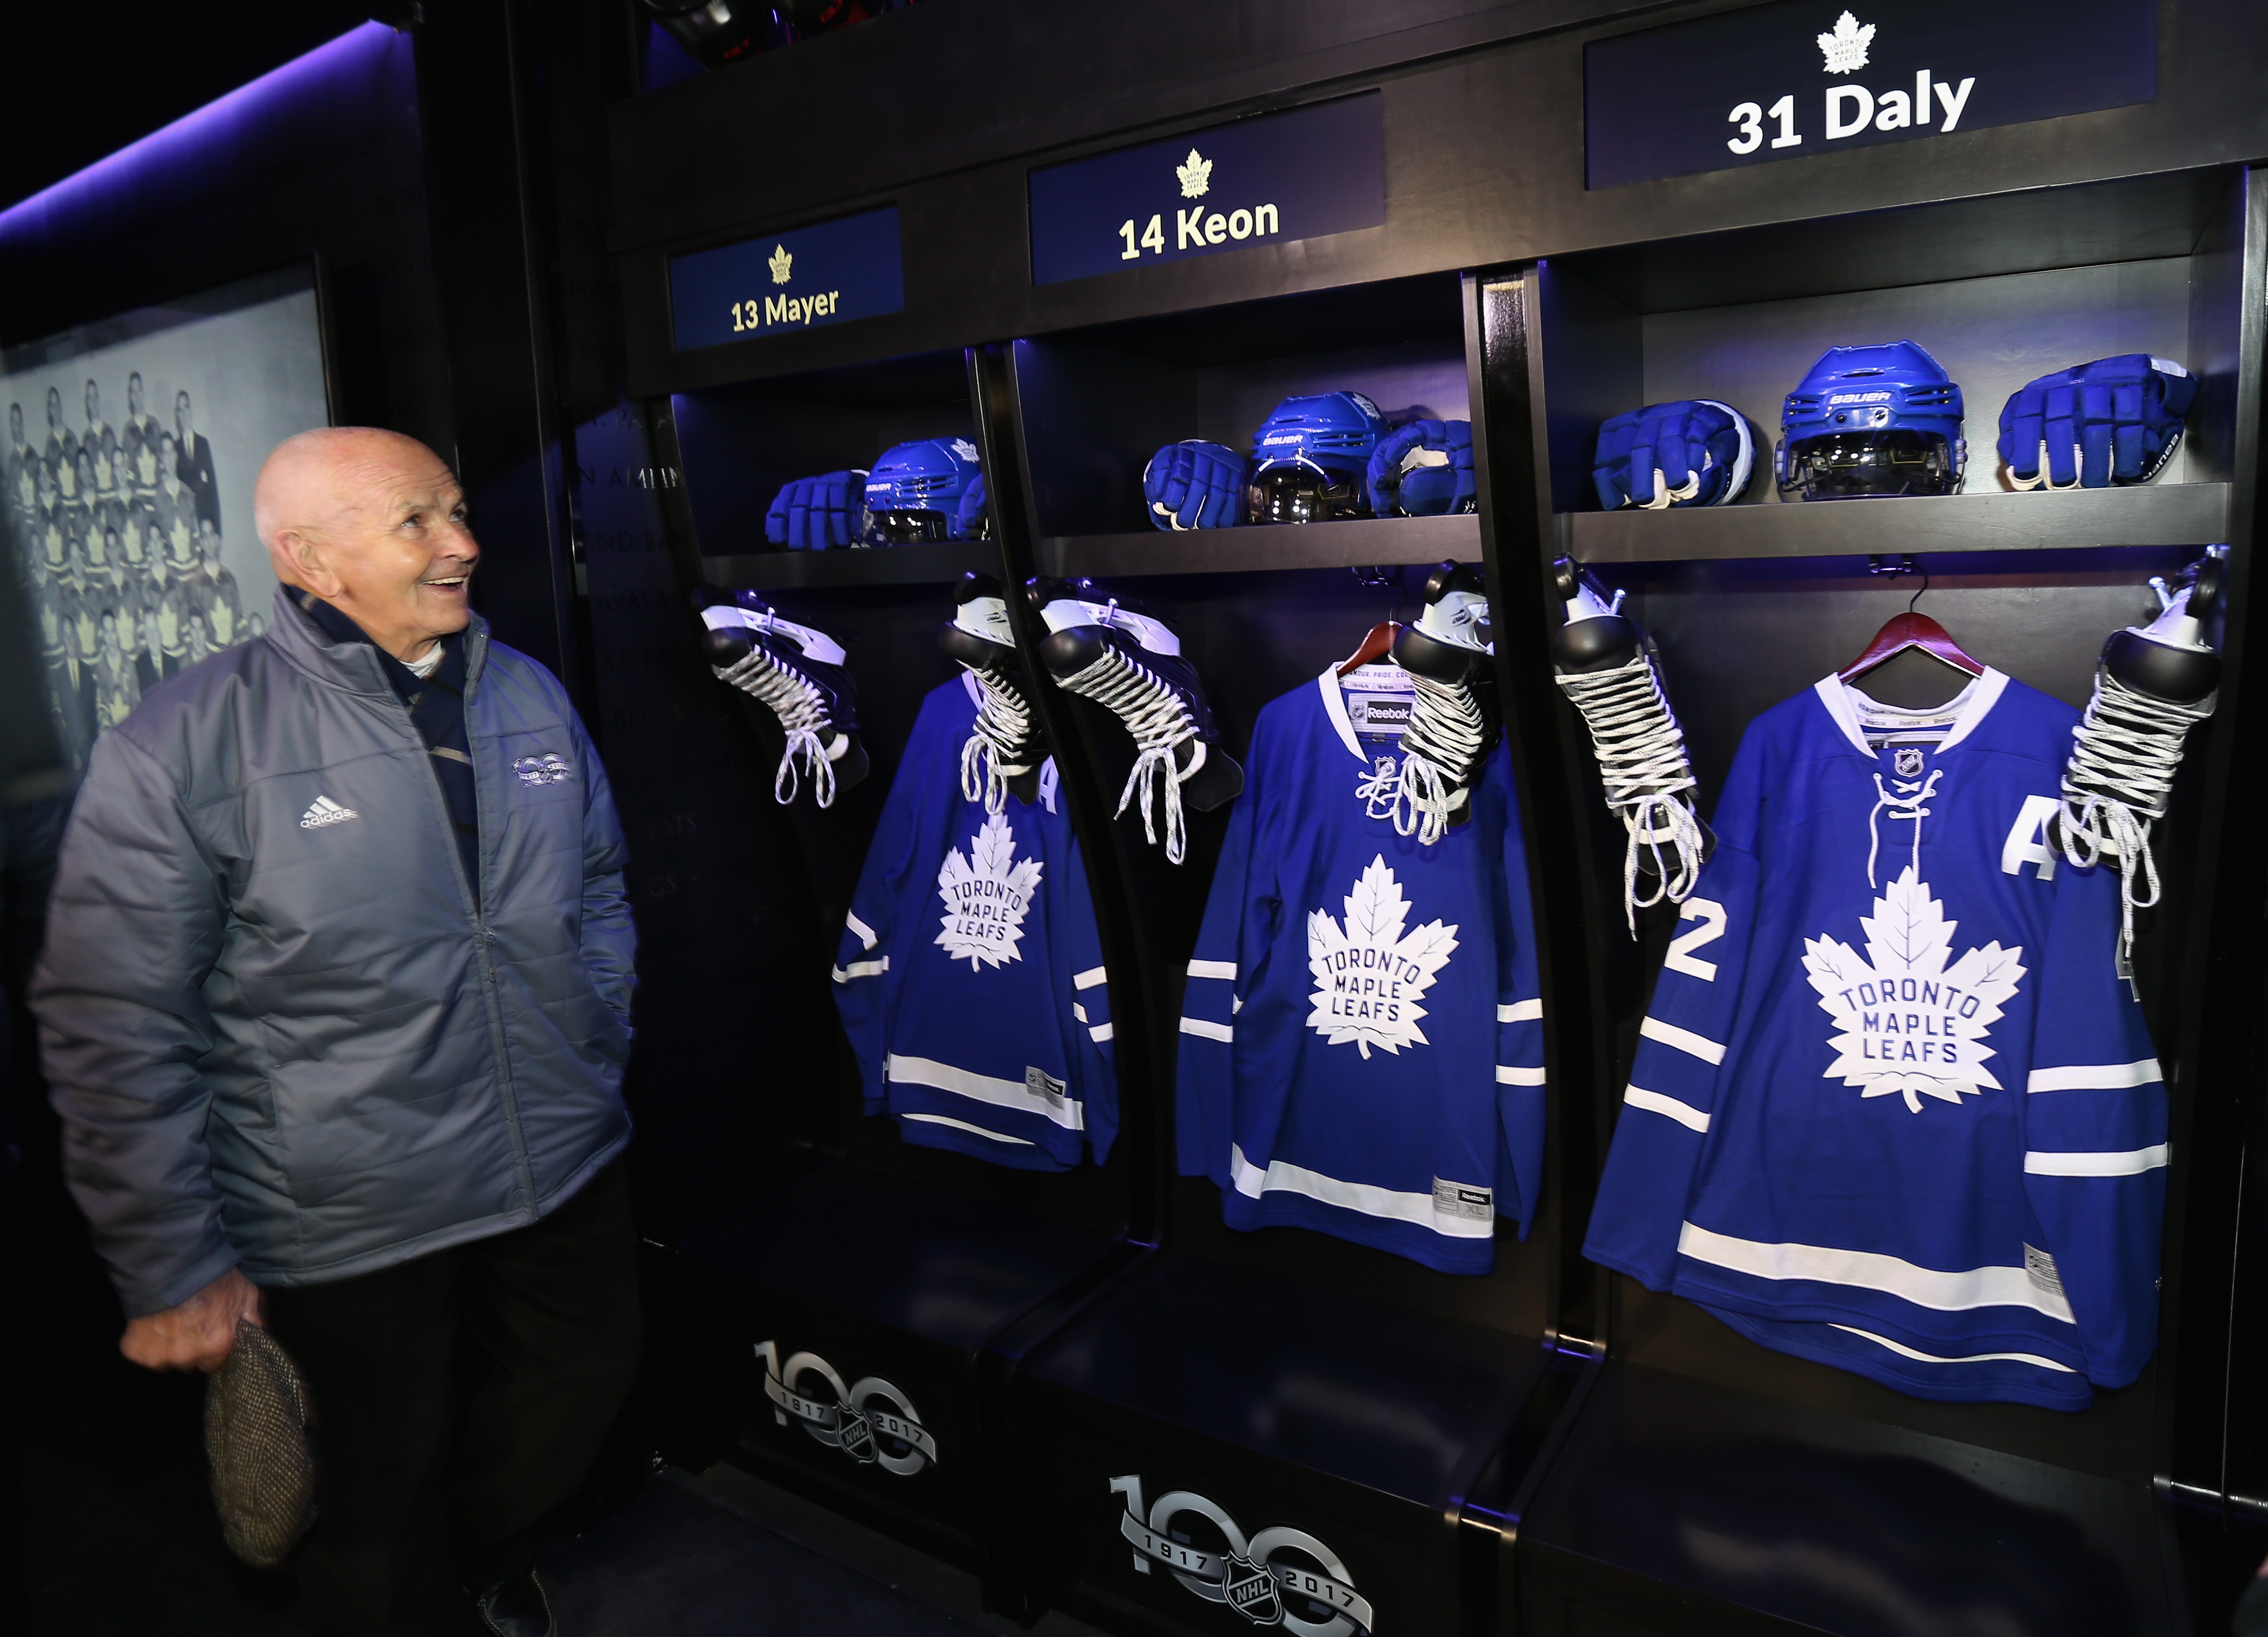 Toronto Maple Leafs Jerseys & Team Shop